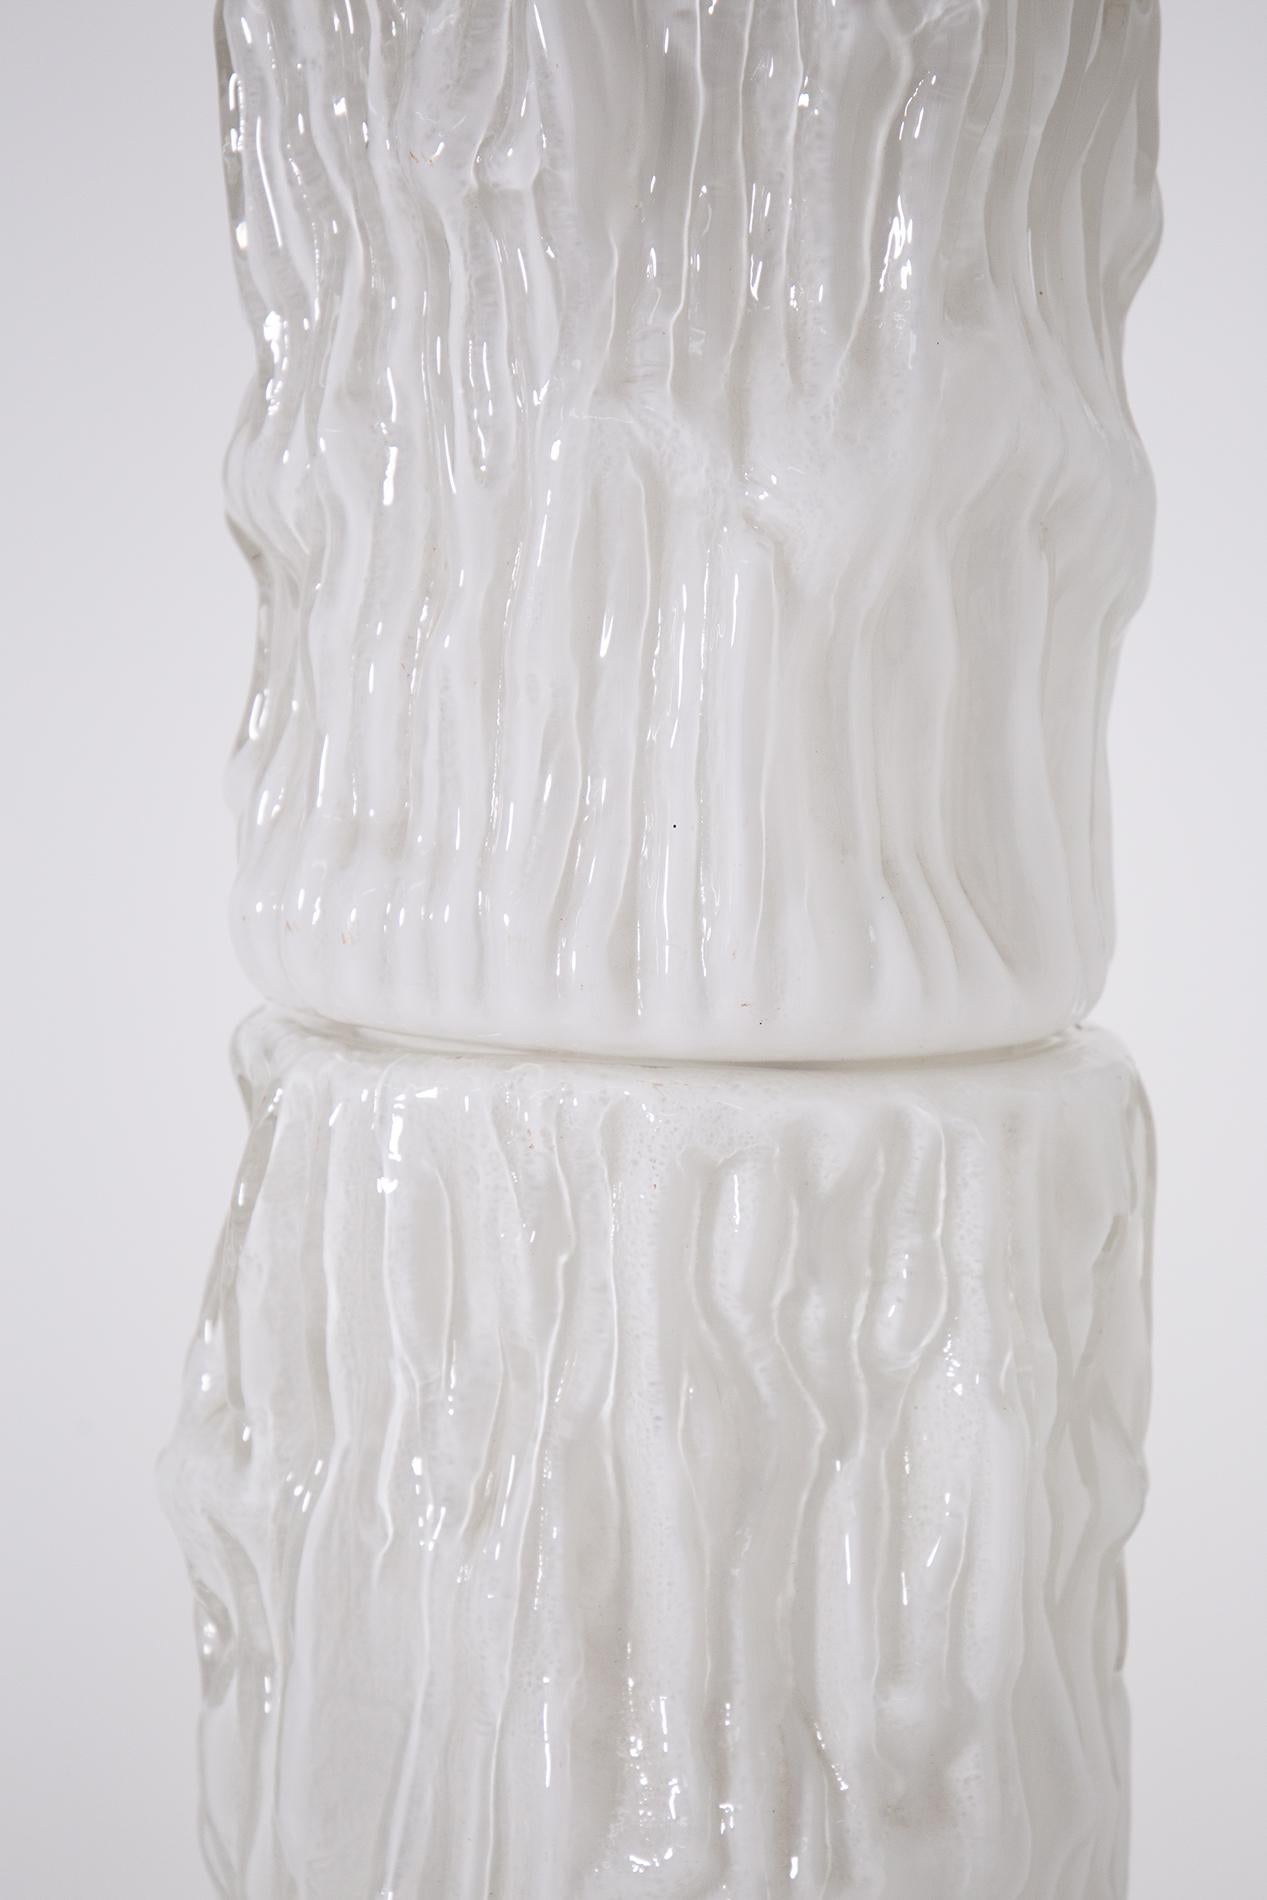 Italian Floor Lamp by Carlo Nason for Mazzega in White Murano Glass, 1960s 3